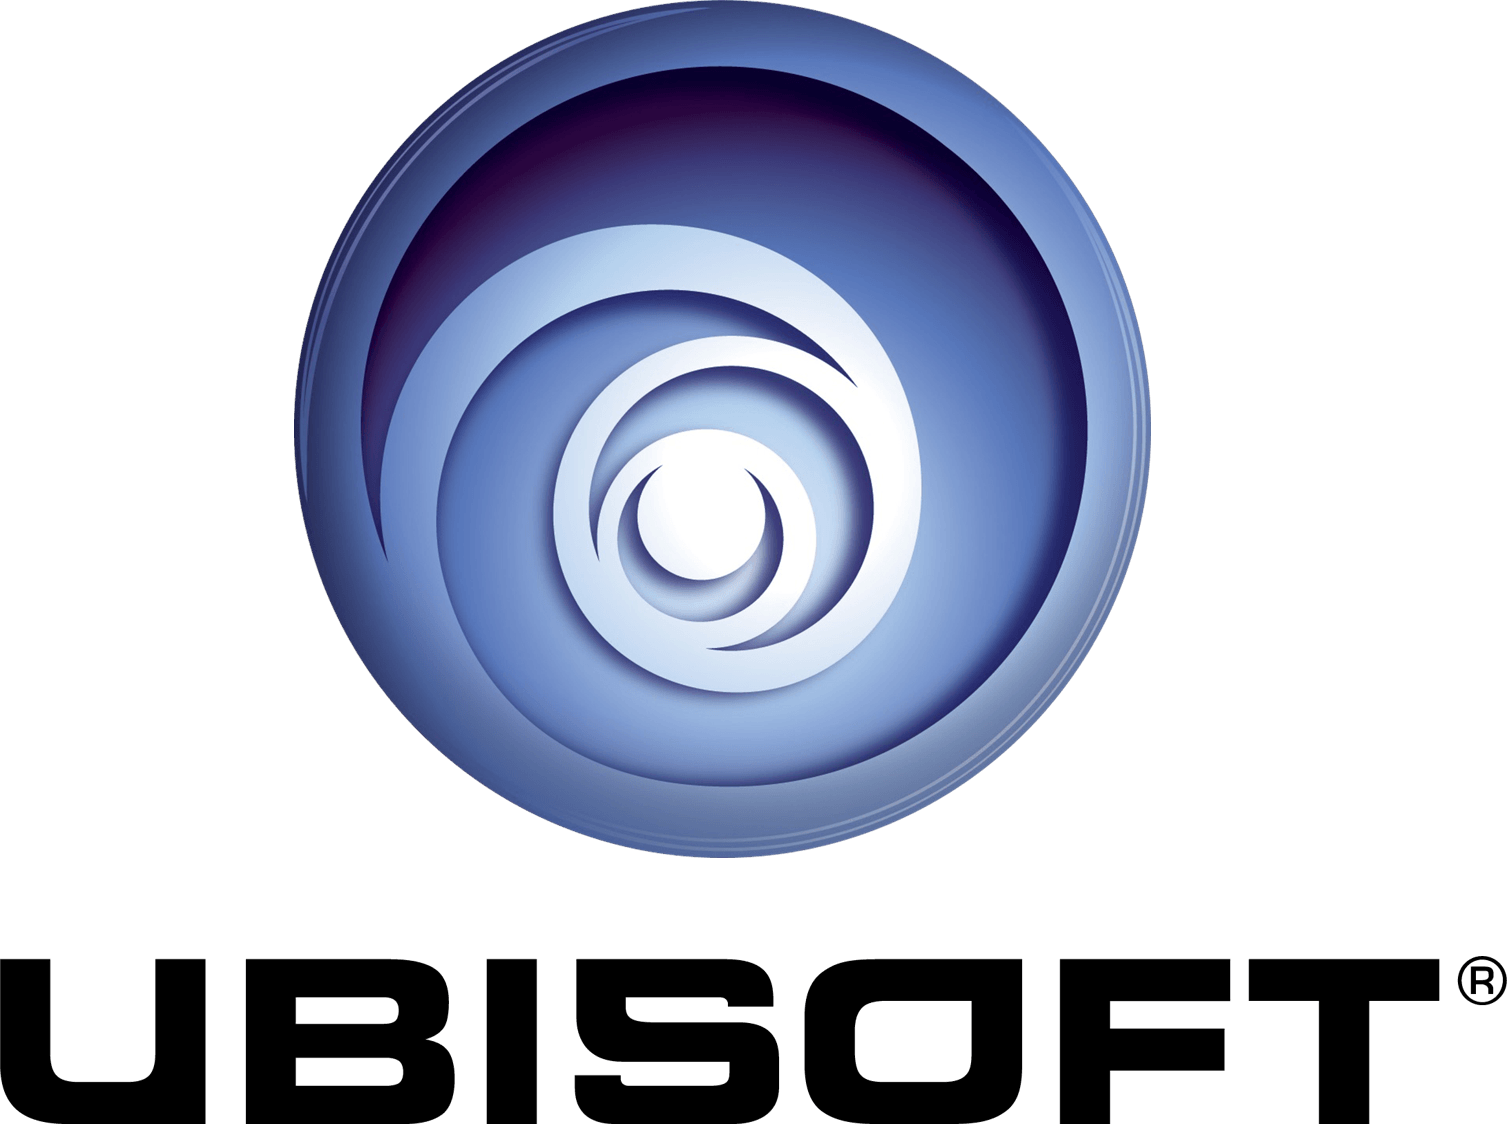 Blue Spiral Logo - Image - Ubisoft Logo (2003) (Black).png | Logopedia | FANDOM powered ...